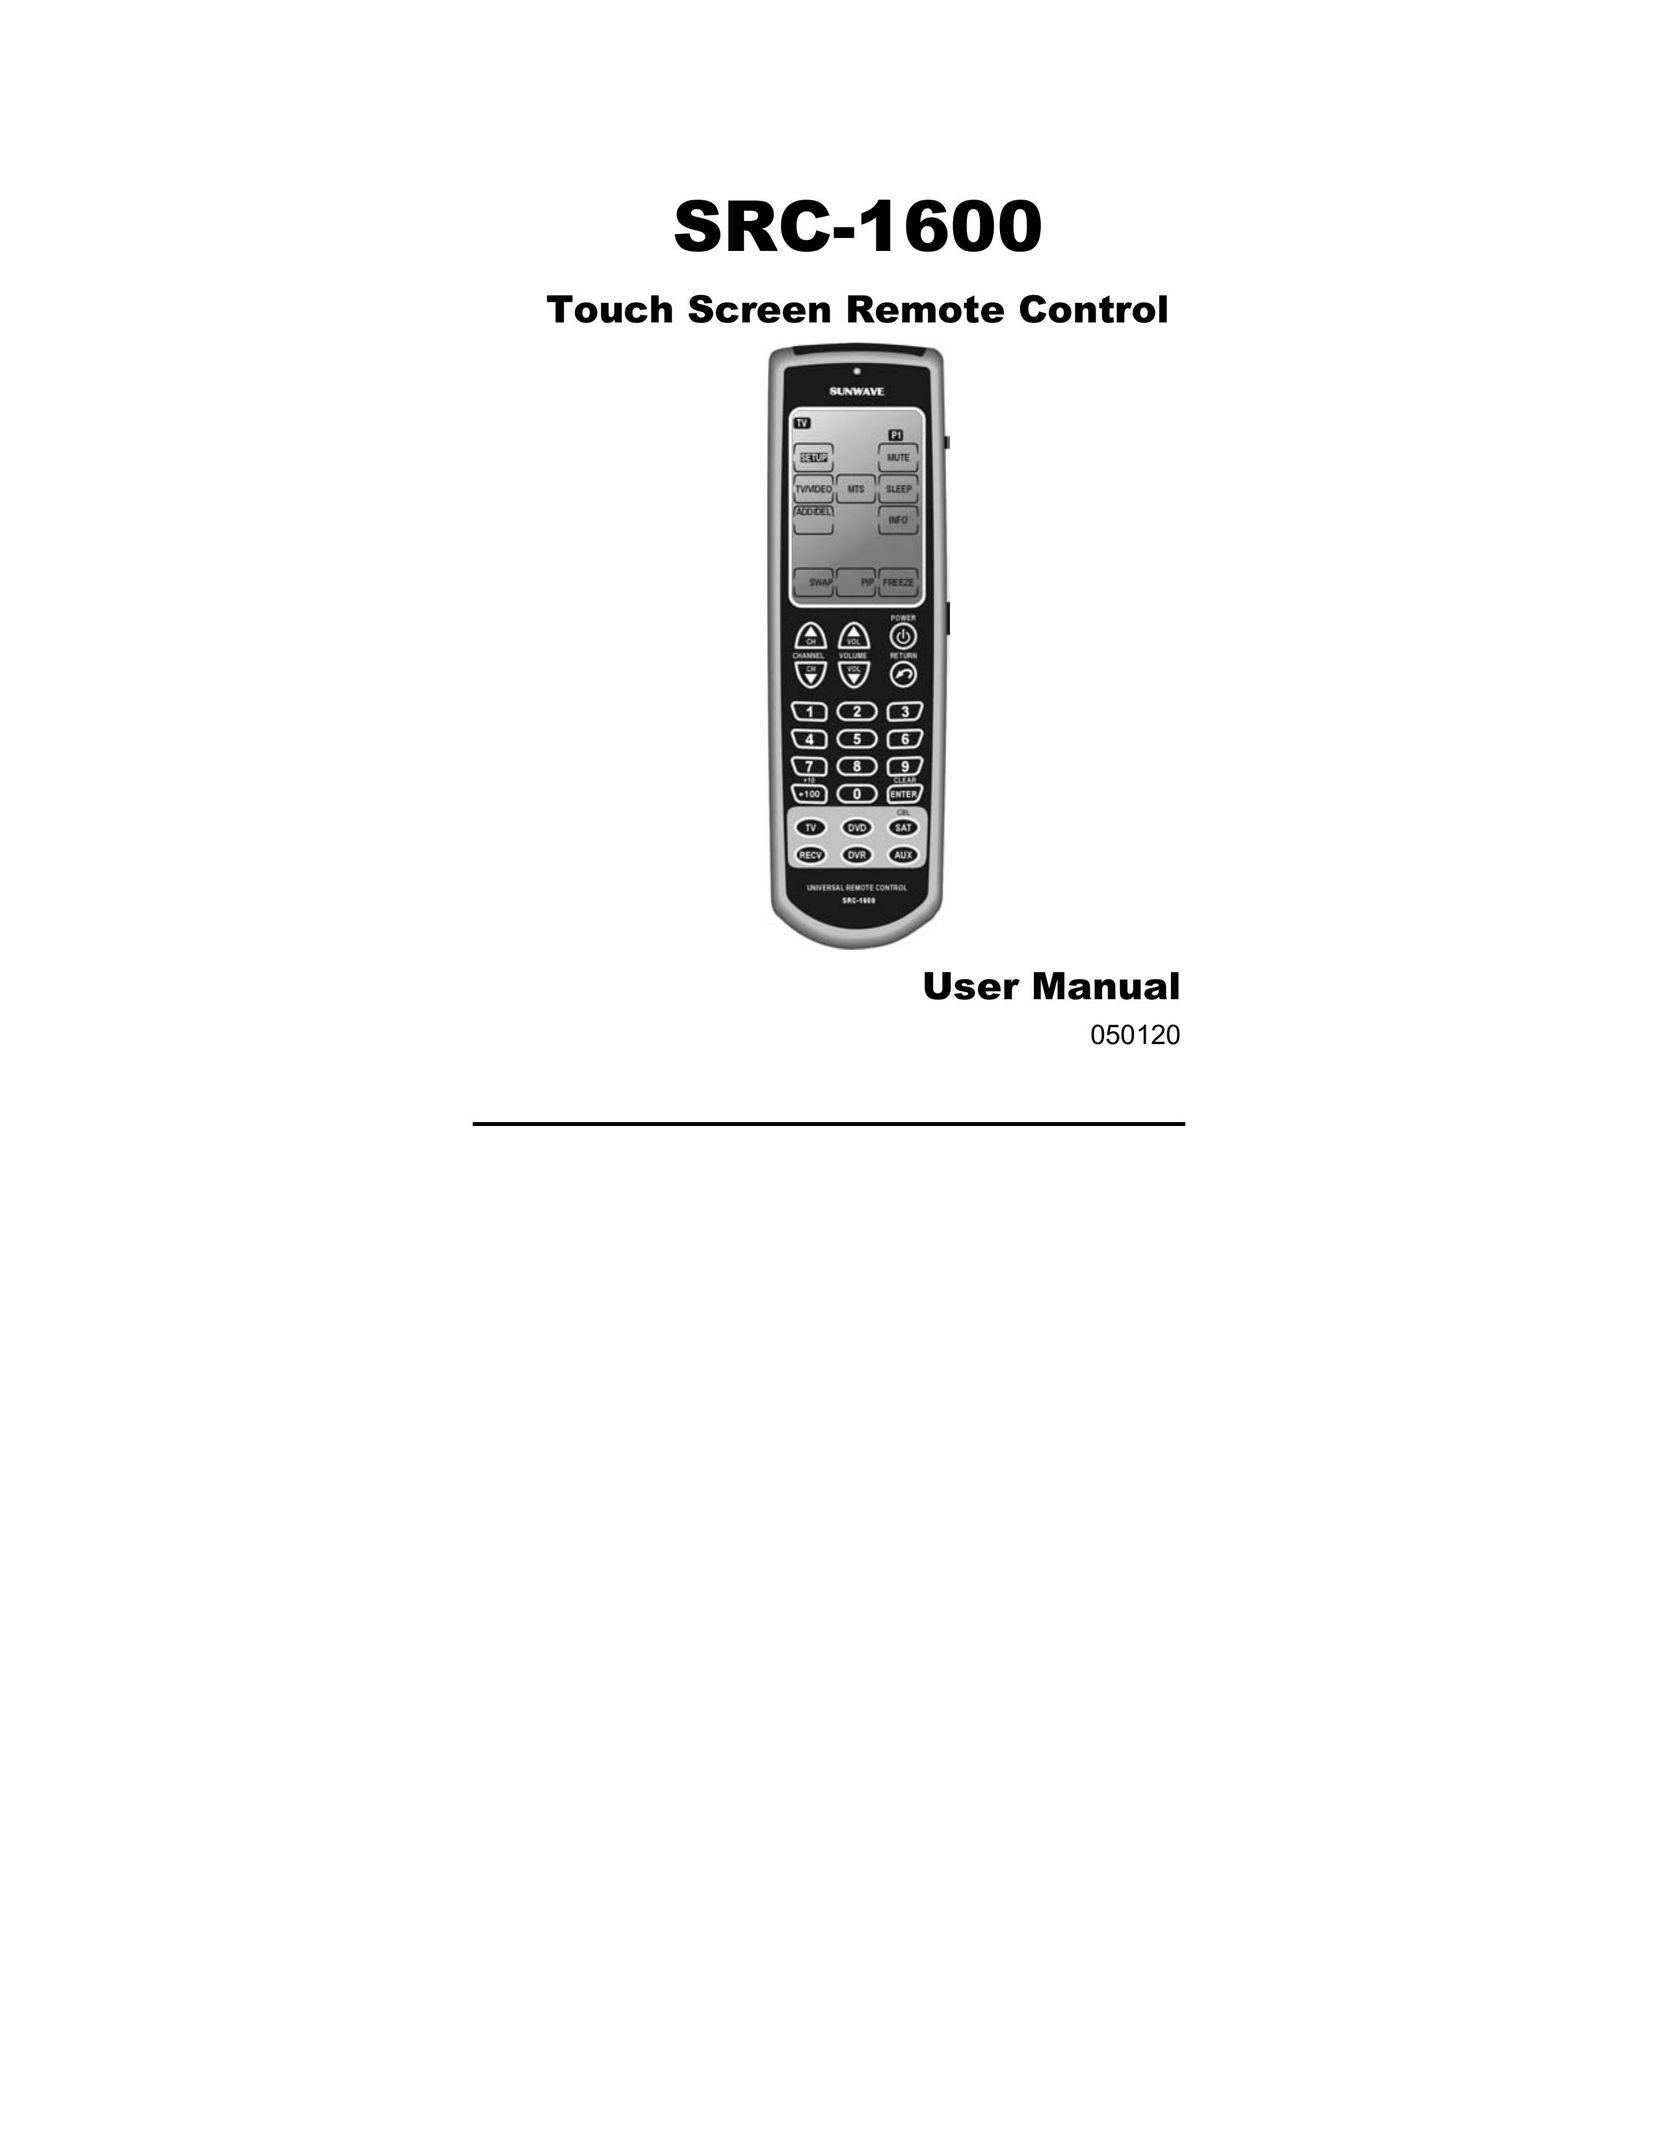 Sunwave Tech. SRC-1600 Universal Remote User Manual